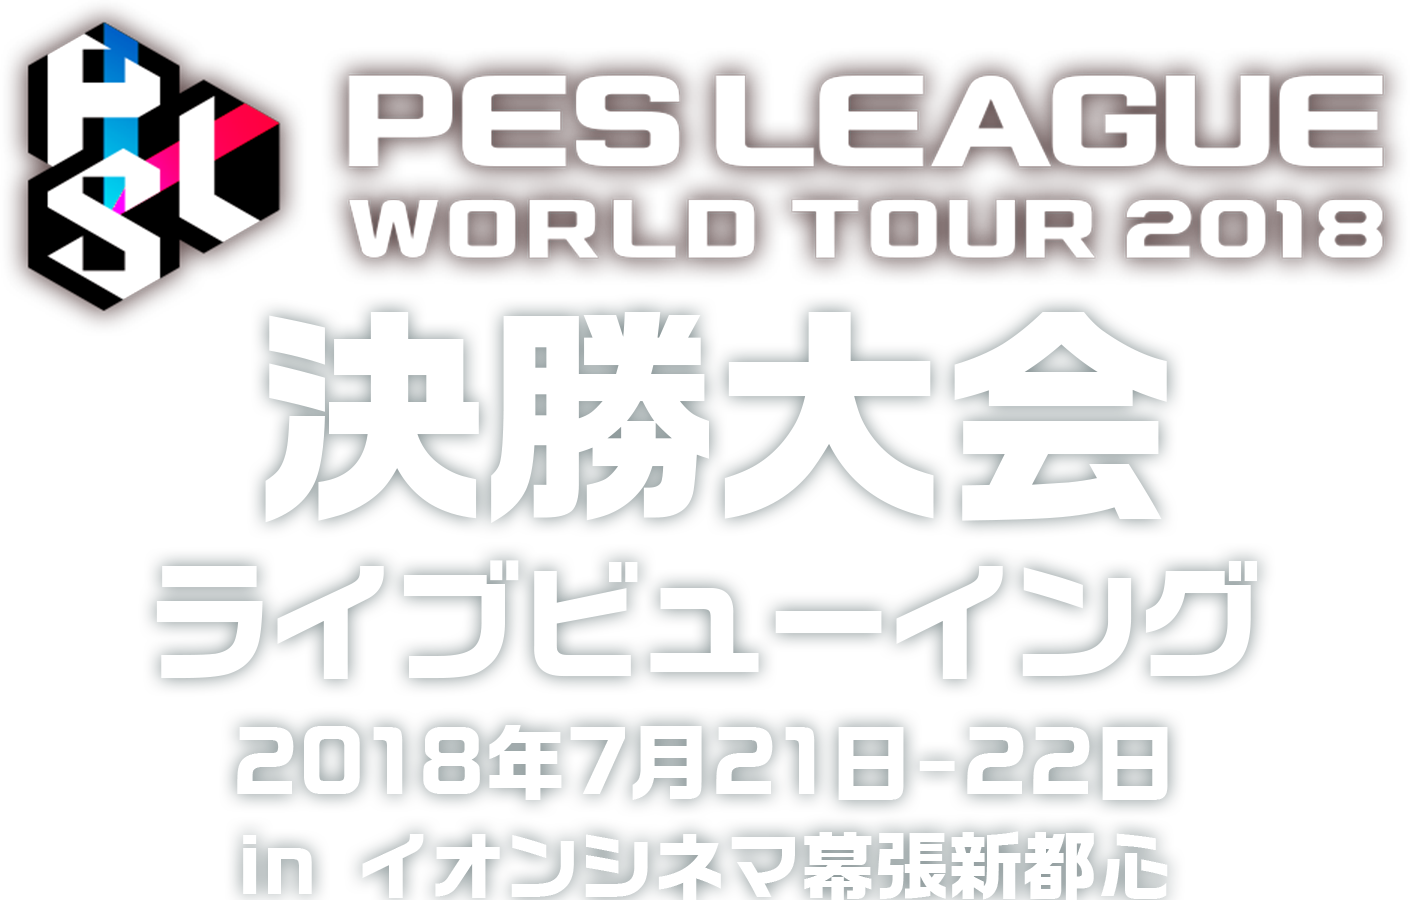 PES LEAGUE WORLD TOUR 2018 決勝大会 ライブビューイング 2018年7月21日-22日 in イオンシネマ幕張新都心